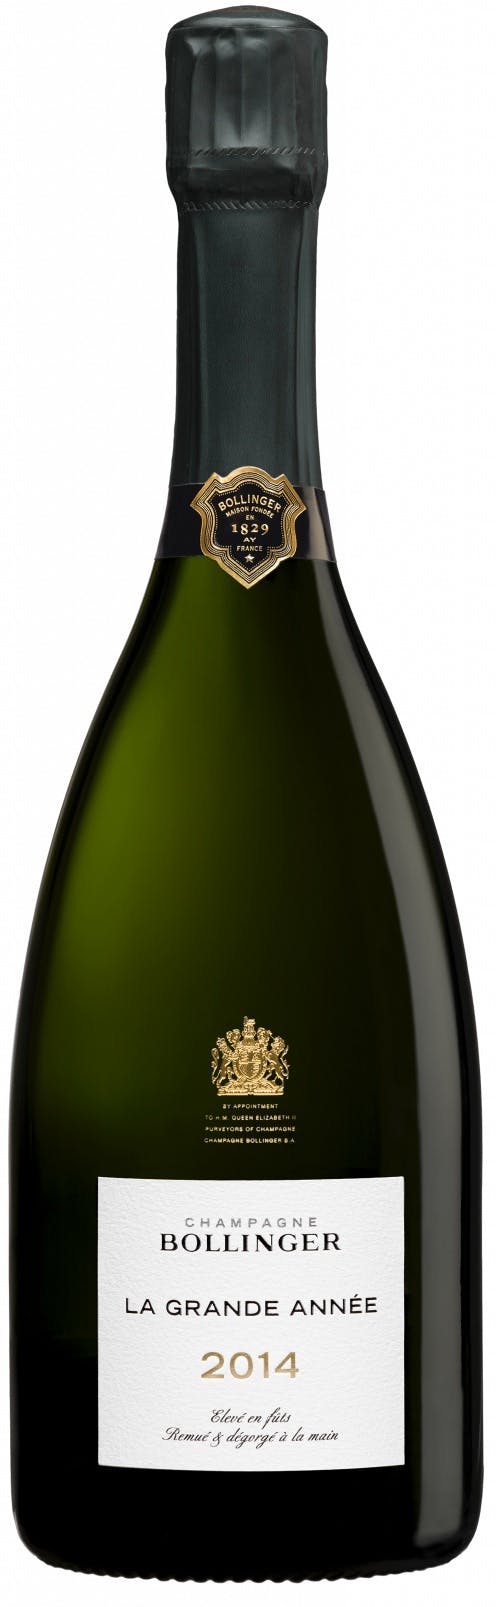 G.H.Mumm Champagne Grand Cordon Rose 750mL – Crown Wine and Spirits